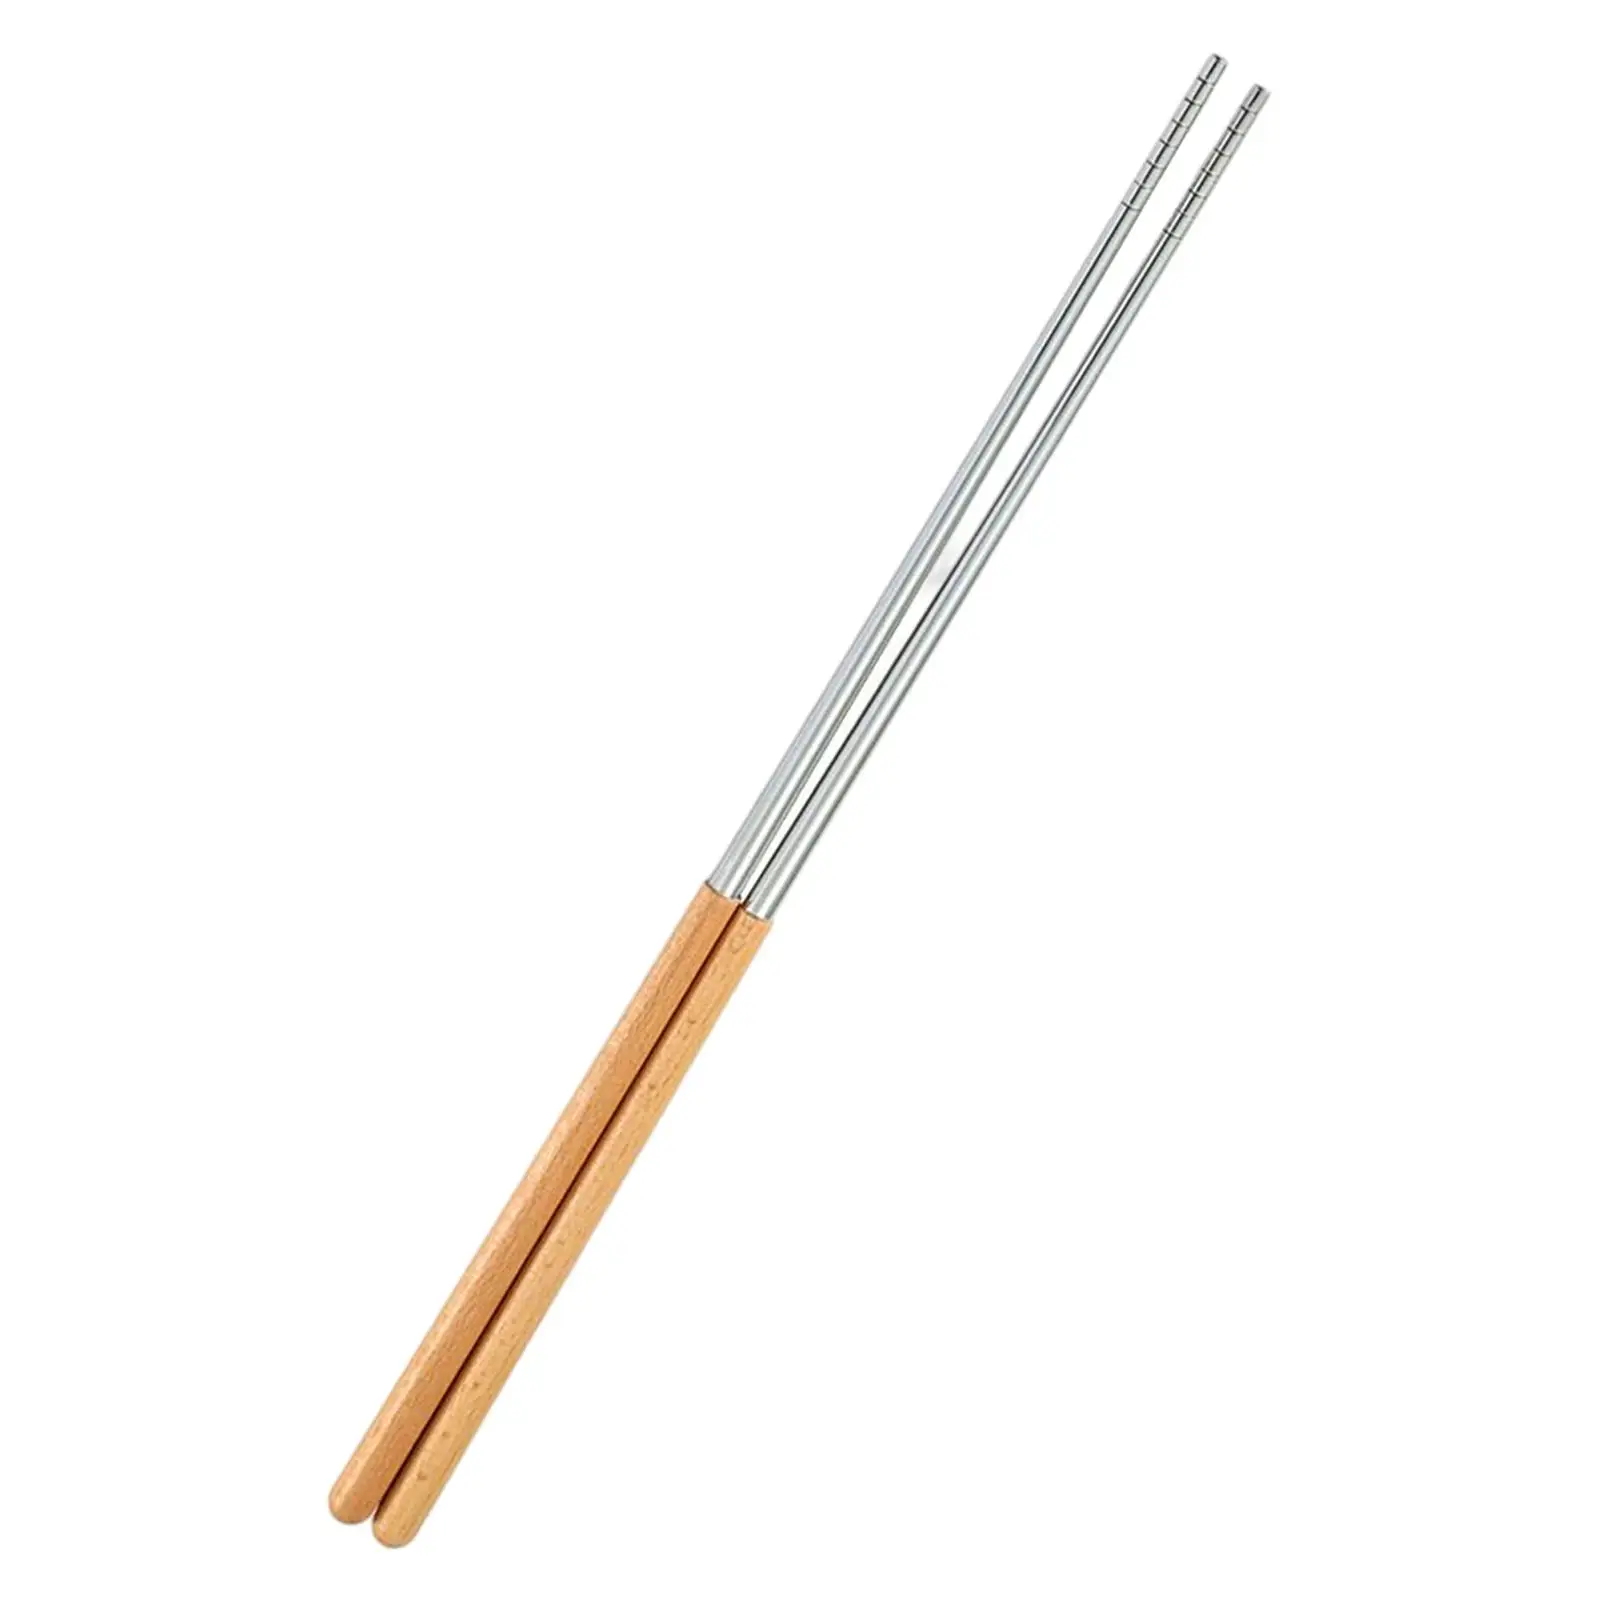 Reusable Lengthen Chopsticks Stainless Steel for Camping Indoor Outdoor BBQ